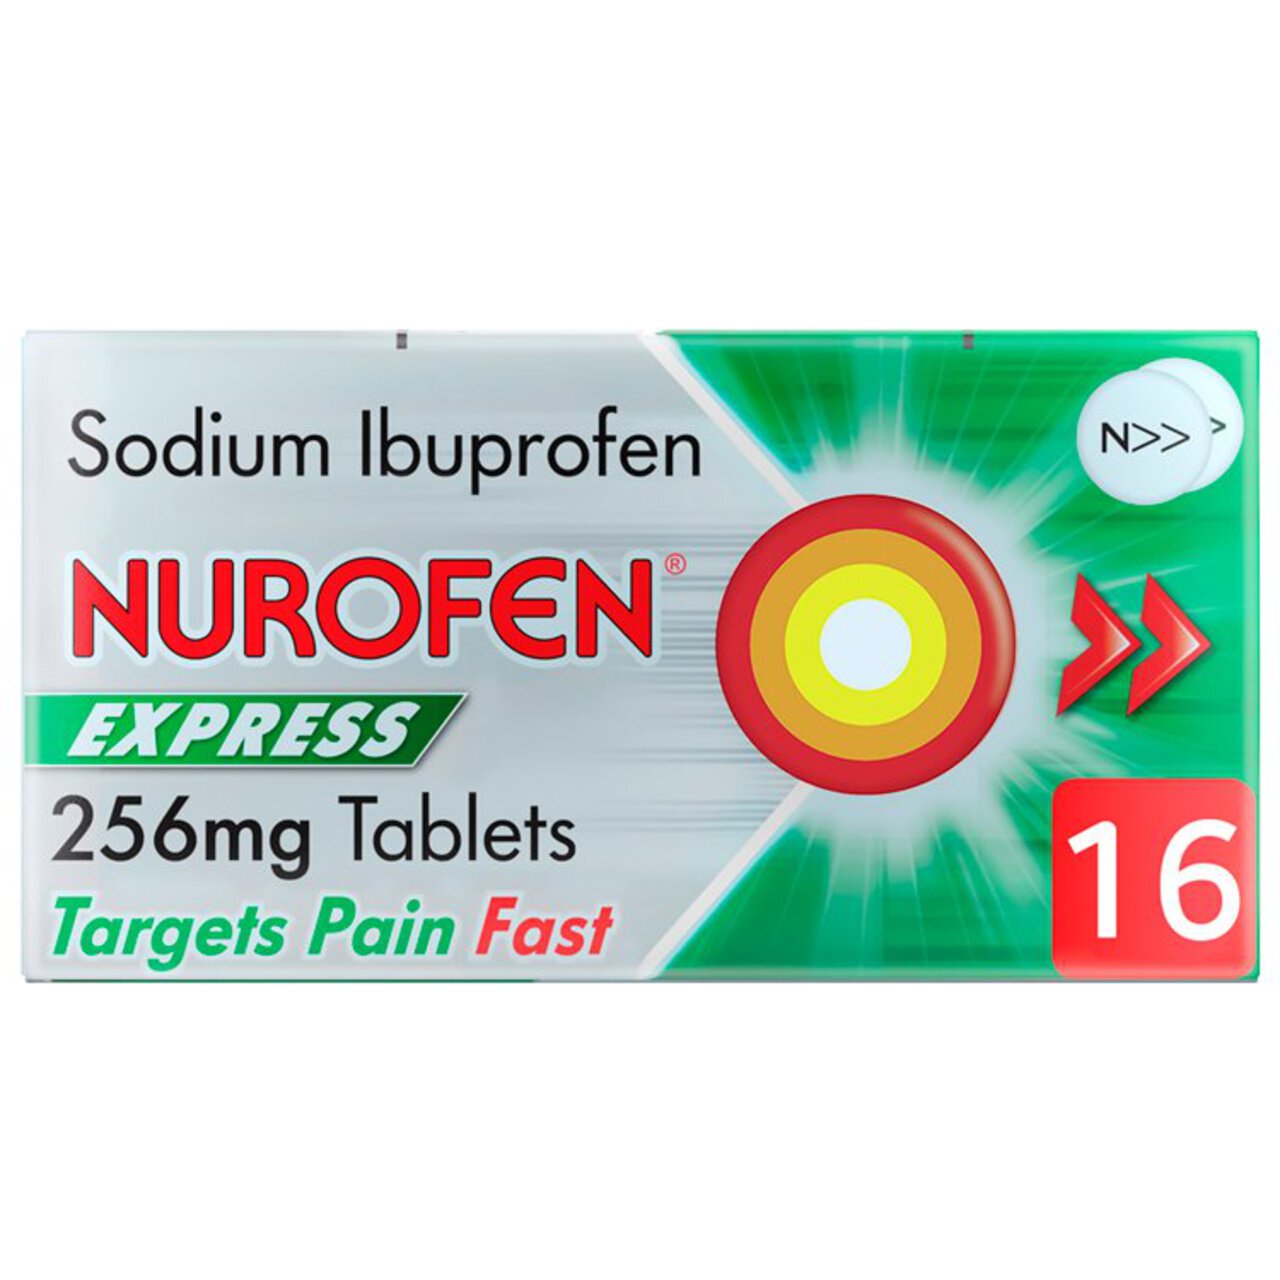 Nurofen Express Pain Relief Sodium Ibuprofen 256mg Tabs 16 per pack